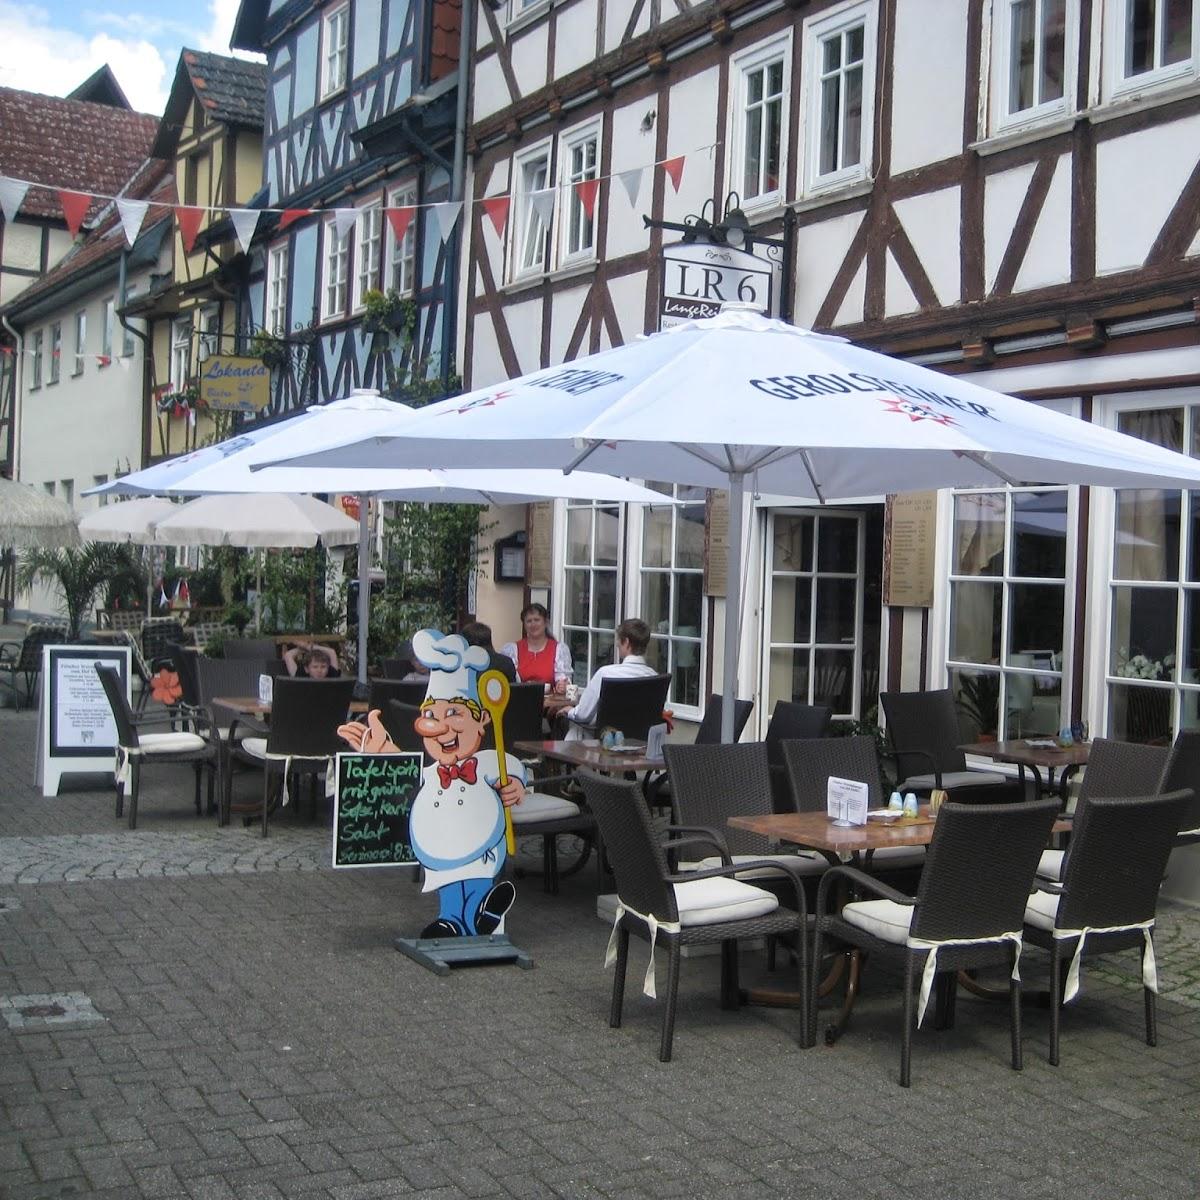 Restaurant "Hotel Restaurant LR6" in Bad Sooden-Allendorf